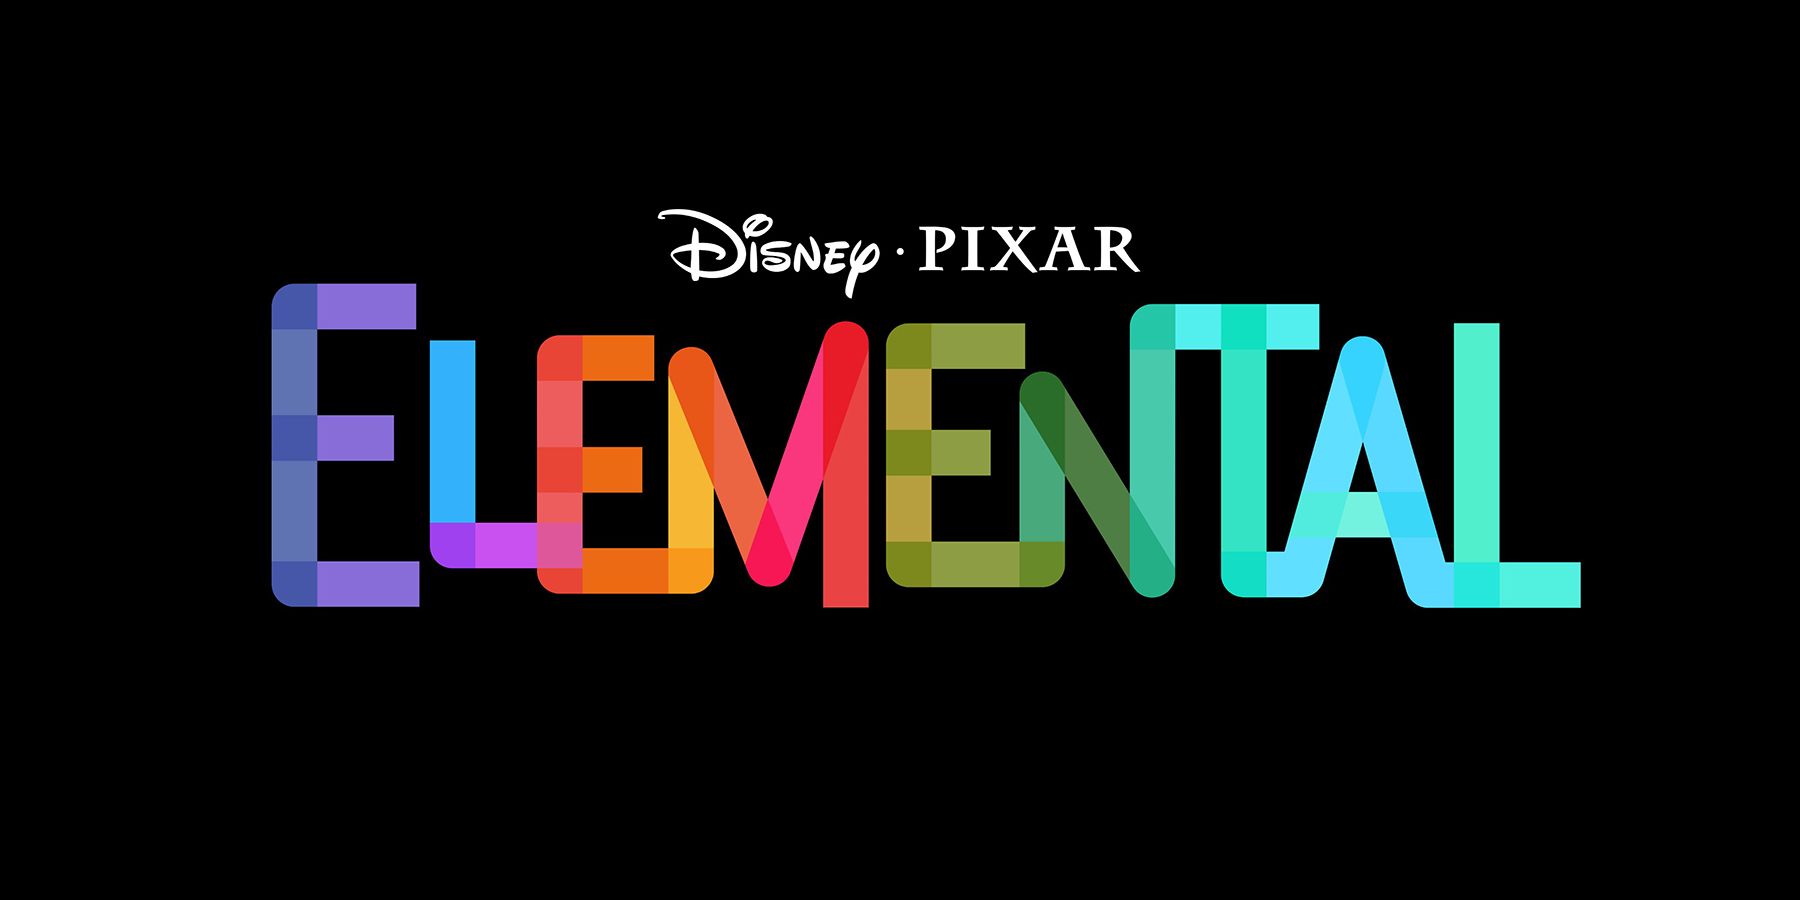 Disney Pixar Elemental